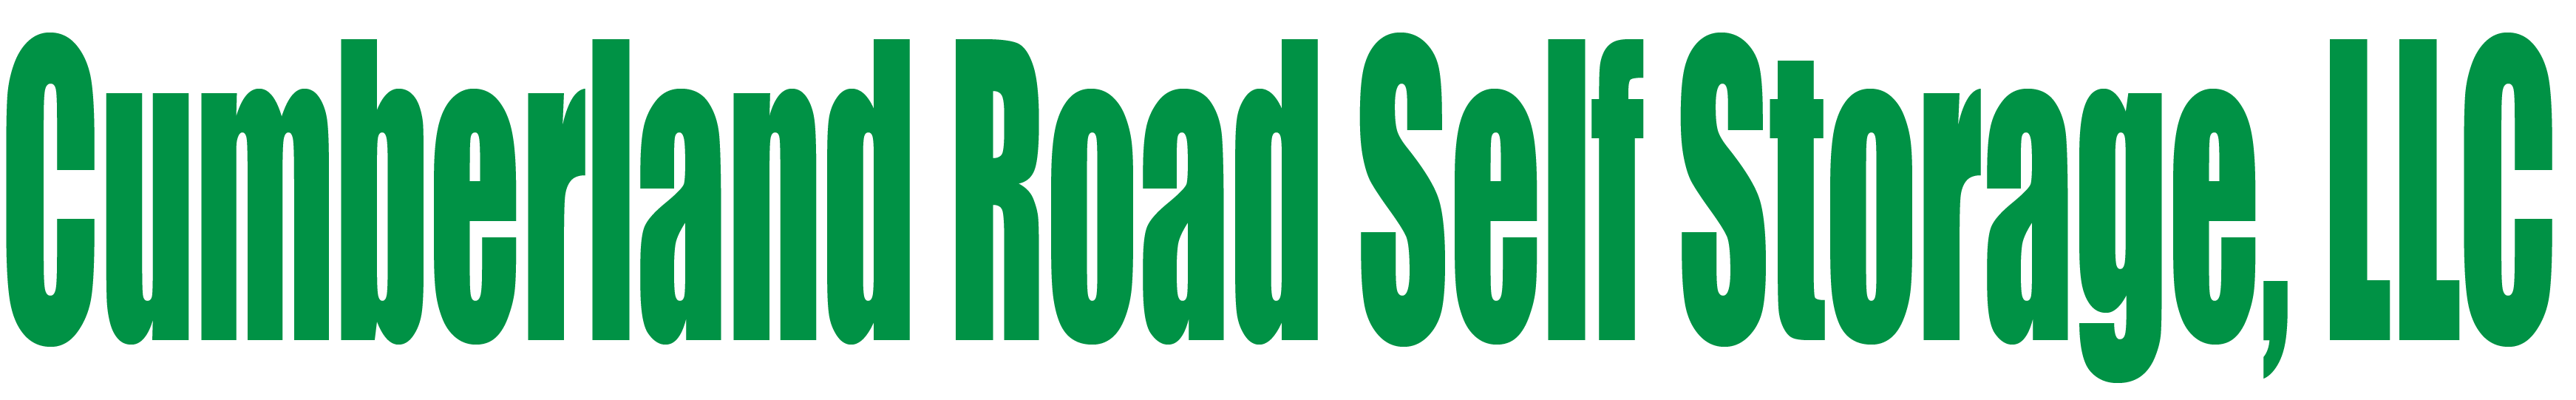 Cumberland Road Self Storage, LLC Logo